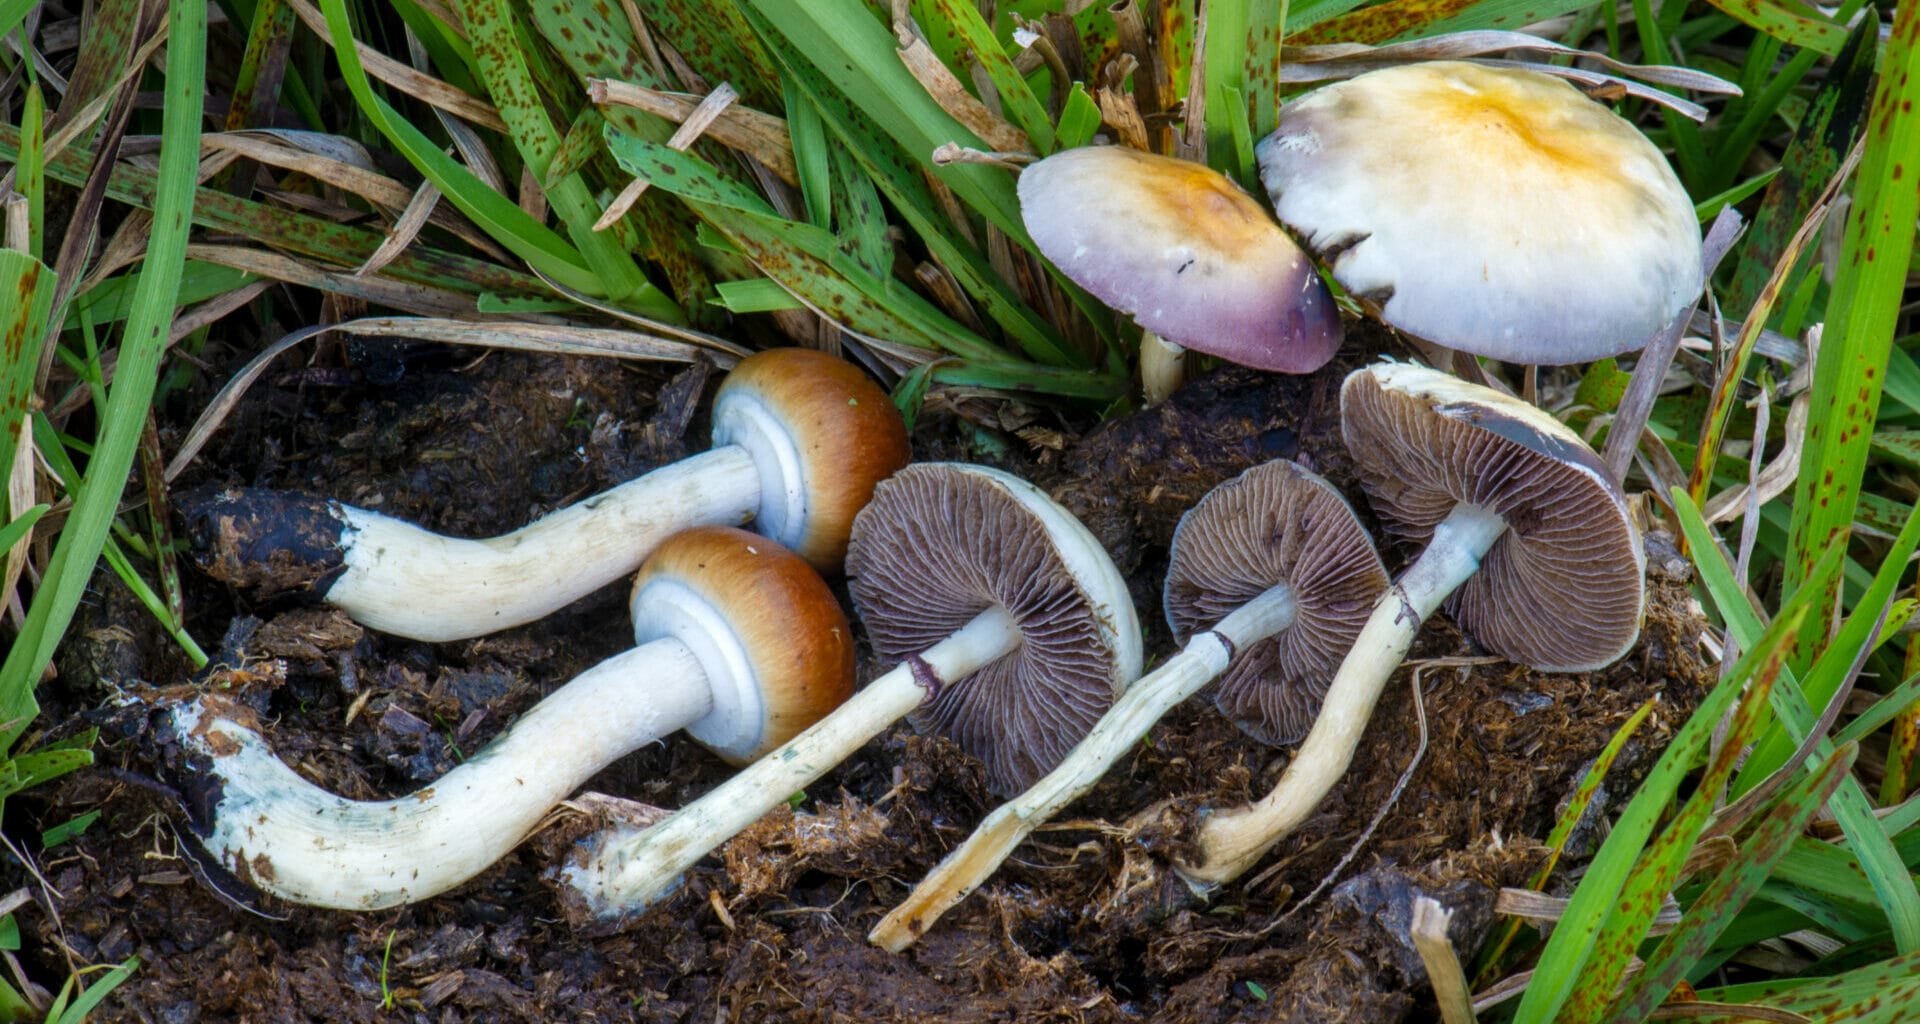 Psilocybe cubensis mushrooms